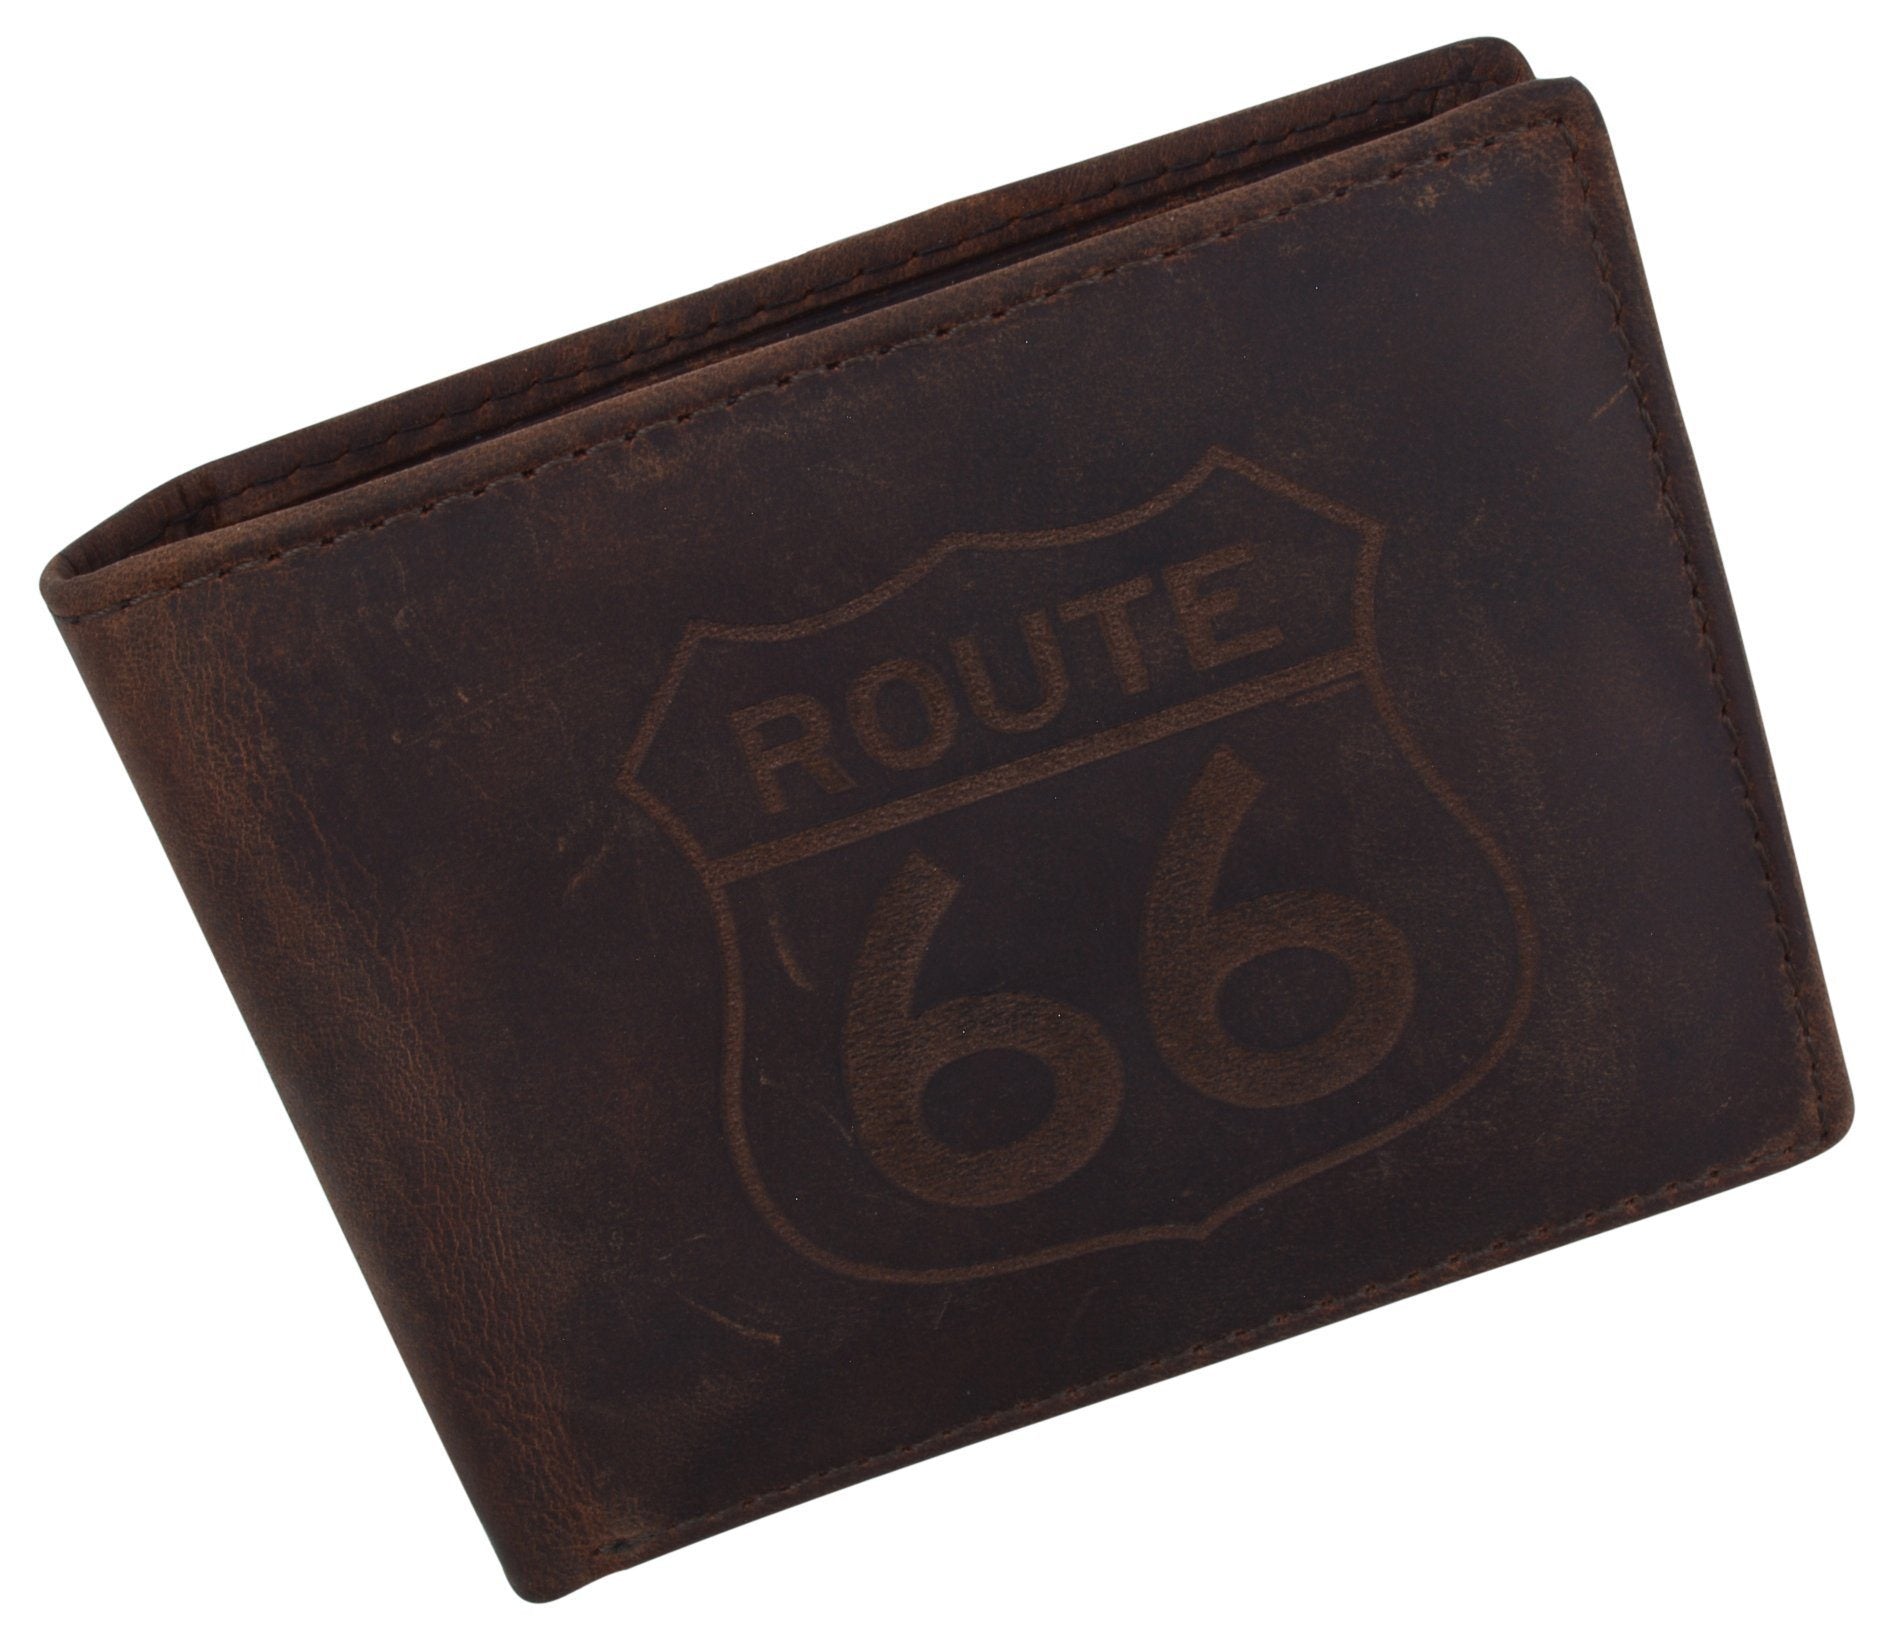 Route 66 Wallet